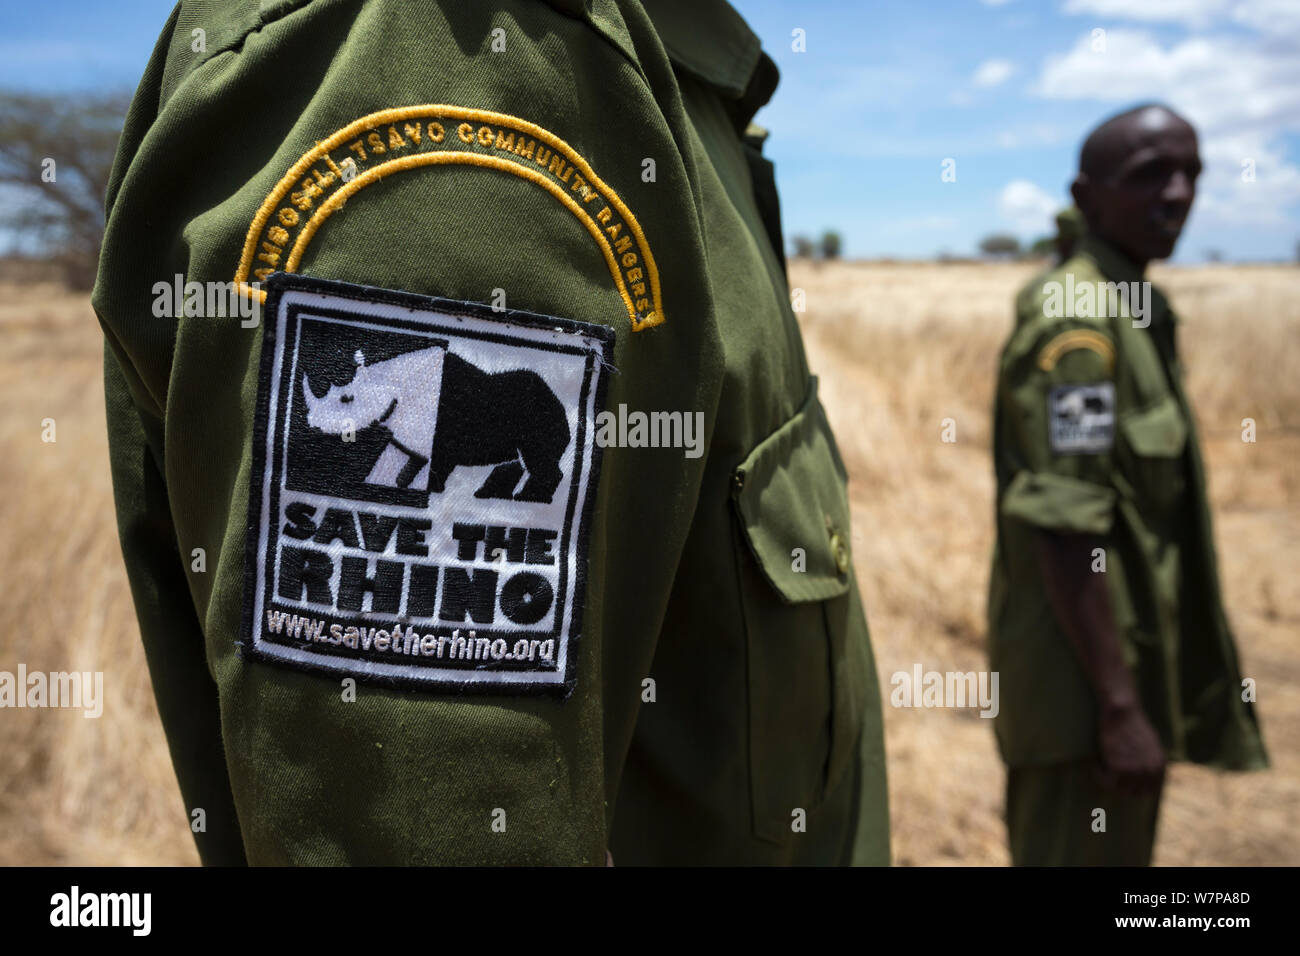 Anti-wilderei Patrouille durch Speichern der Rhino International, Mbirikani Group Ranch, Amboseli-Tsavo Ökosystem, Chyulu Hills, Kenia, Afrika, Oktober 2012 unterstützt. Stockfoto